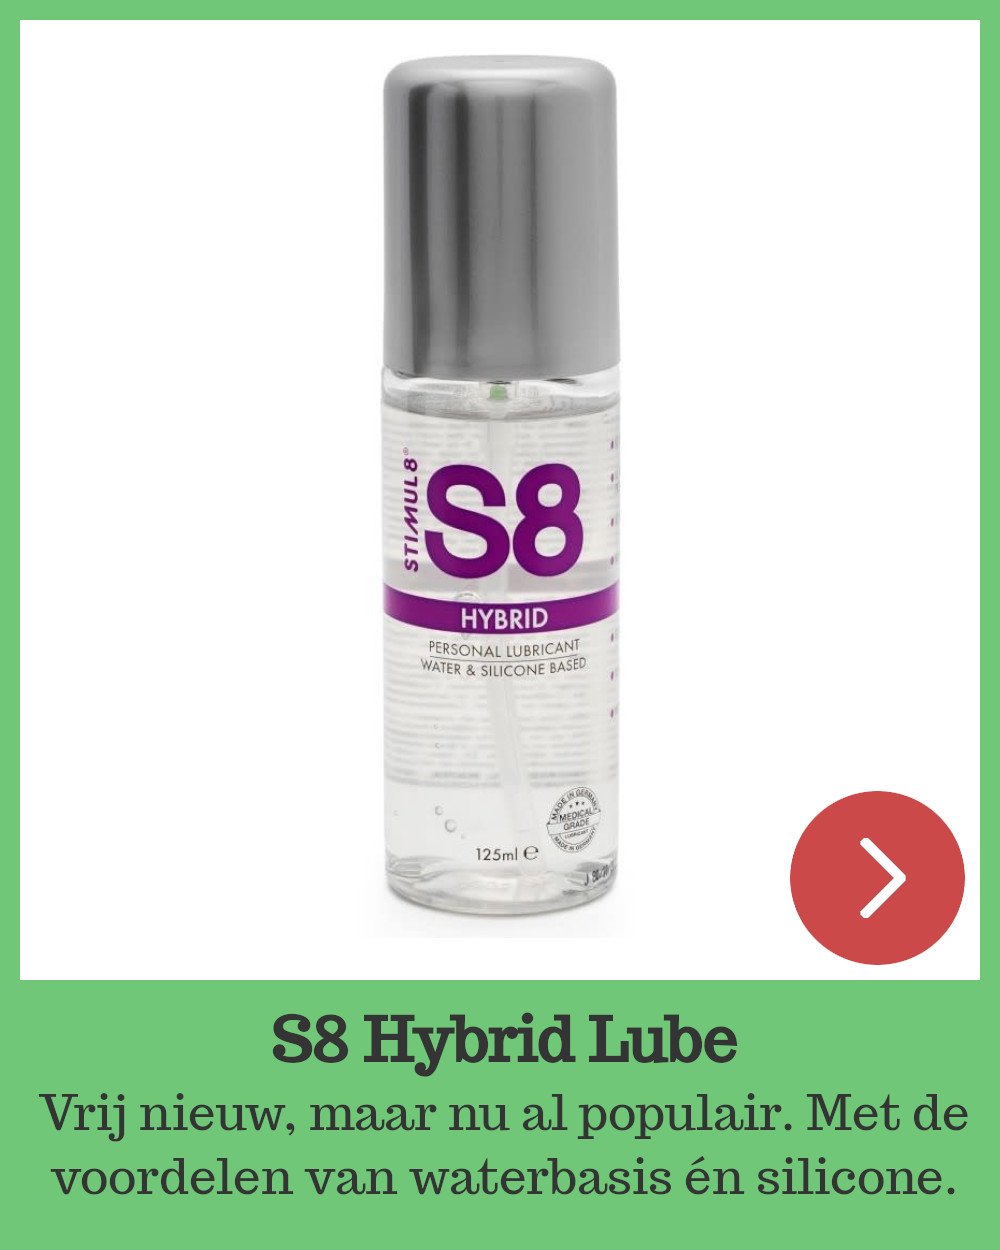 S8 Hybrid lube: het beste van waterbasis én siliconen